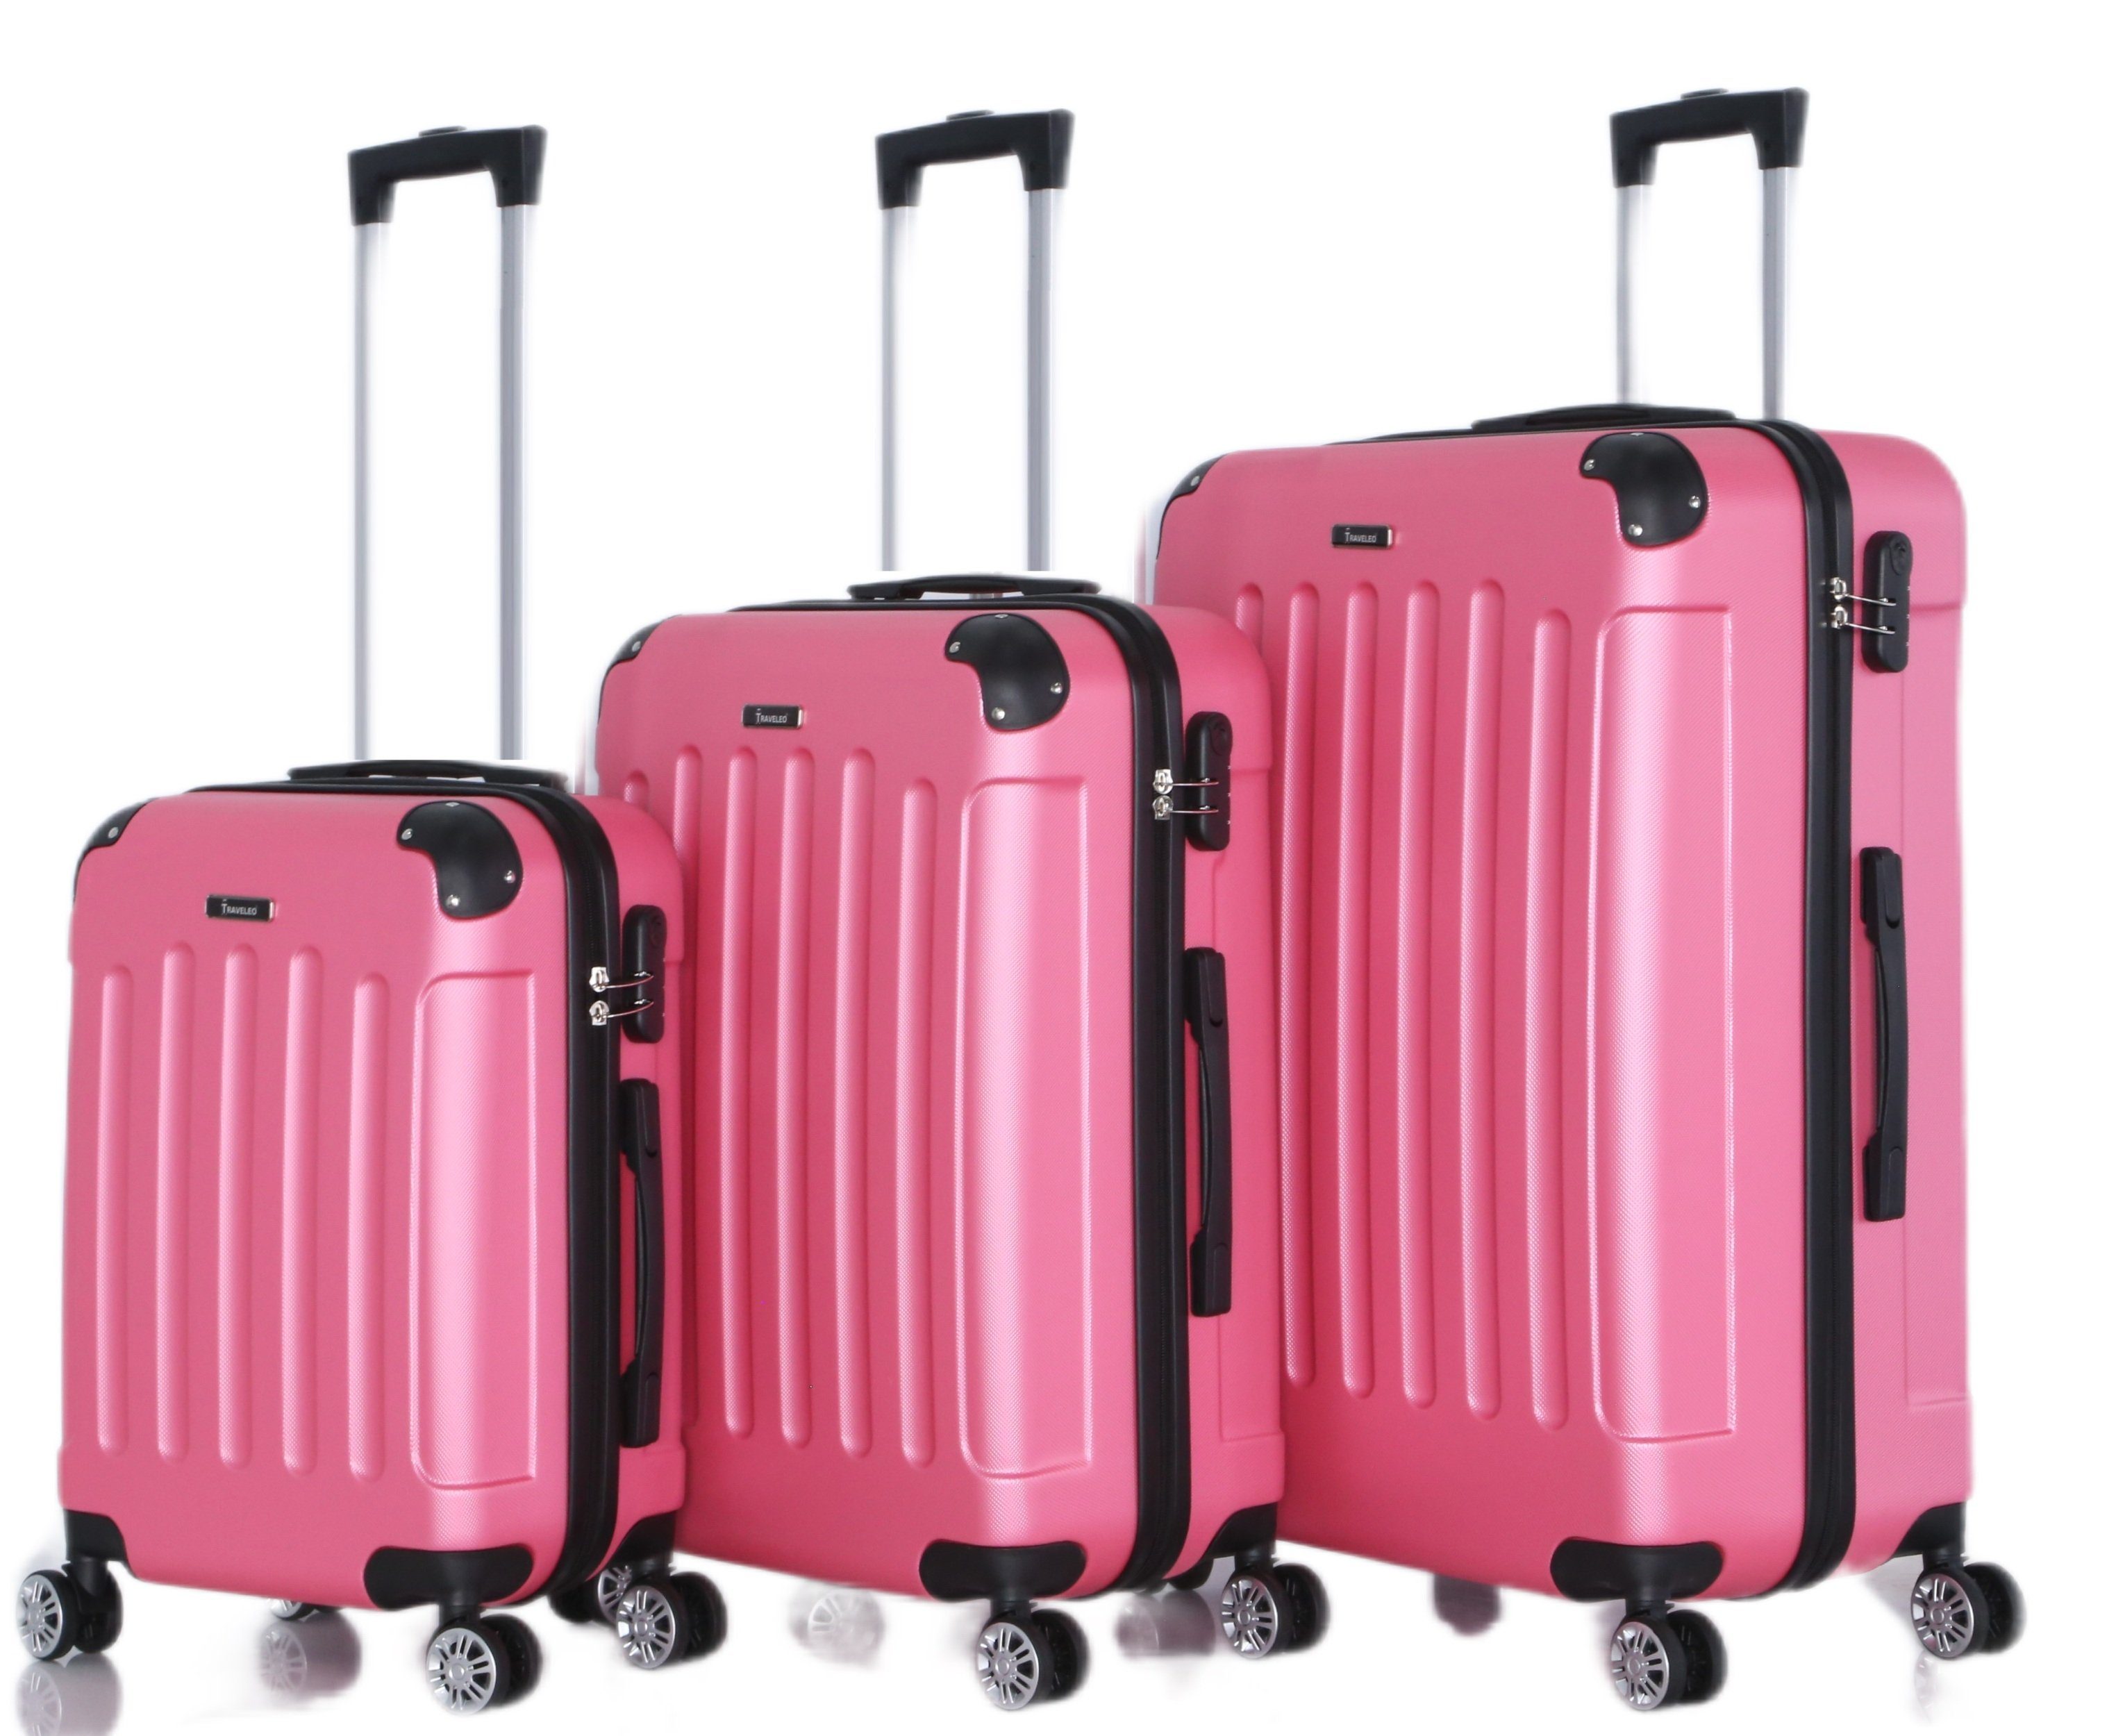 Rungassi Kofferset Hartschalenkoffer Trolley Rungassi Koffer ABS01 pink Reisekoffer Set